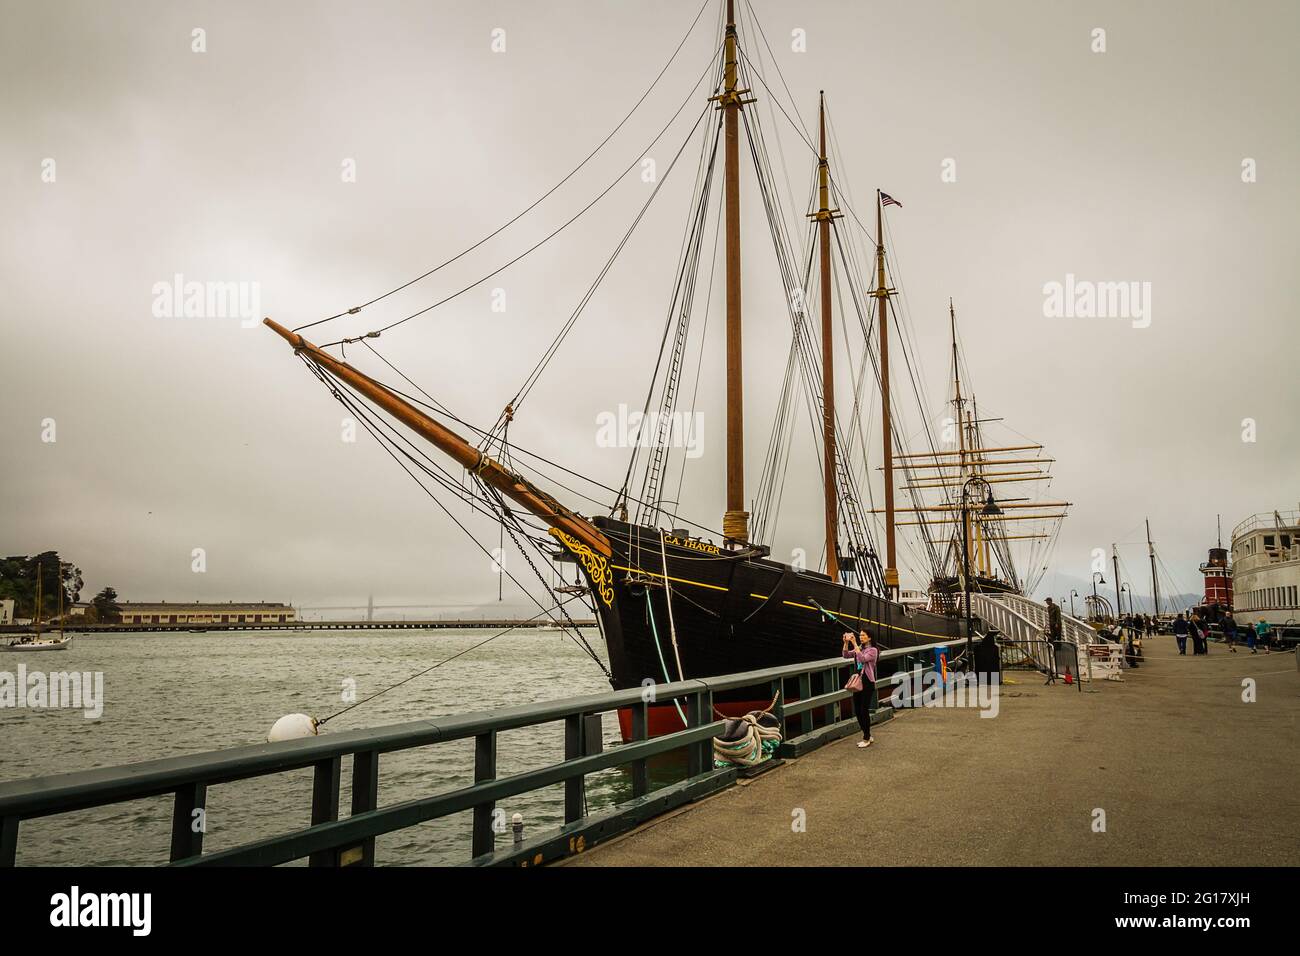 C.A. Thayer schooner on Pier 39, San Francisco Stock Photo